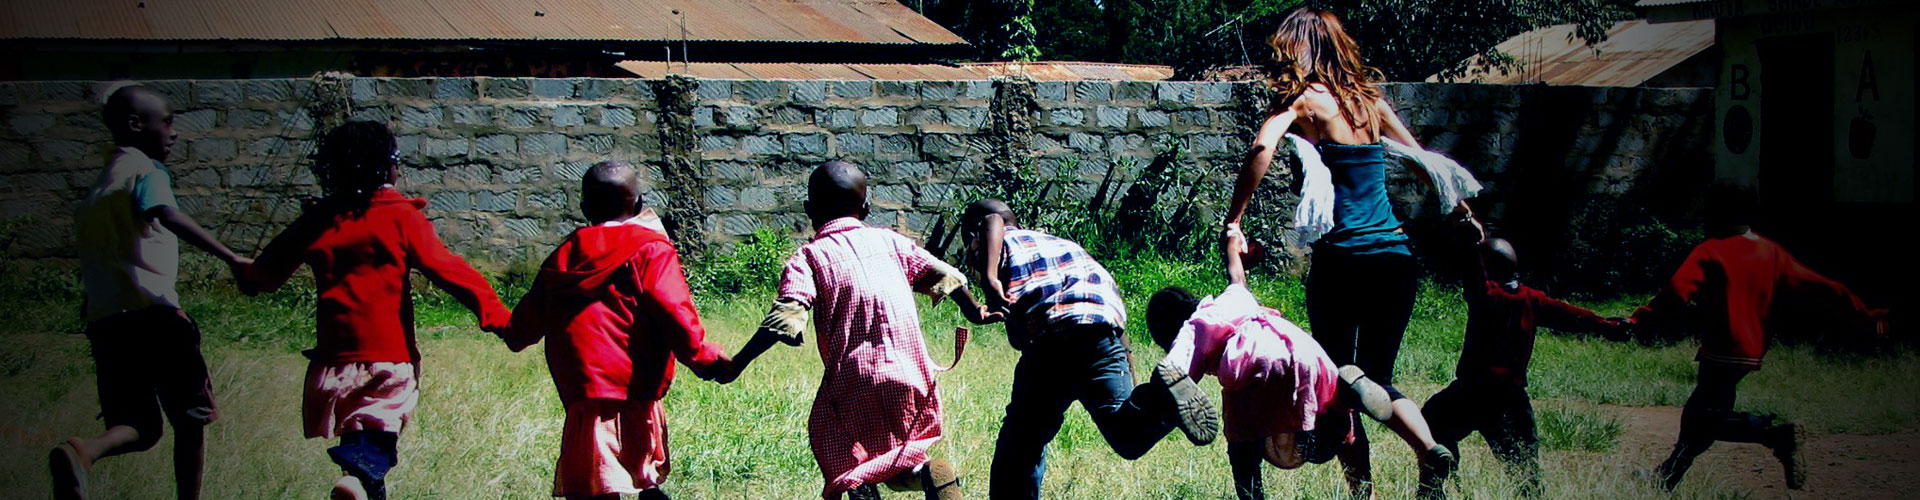 Enseñanza voluntaria en Kenia